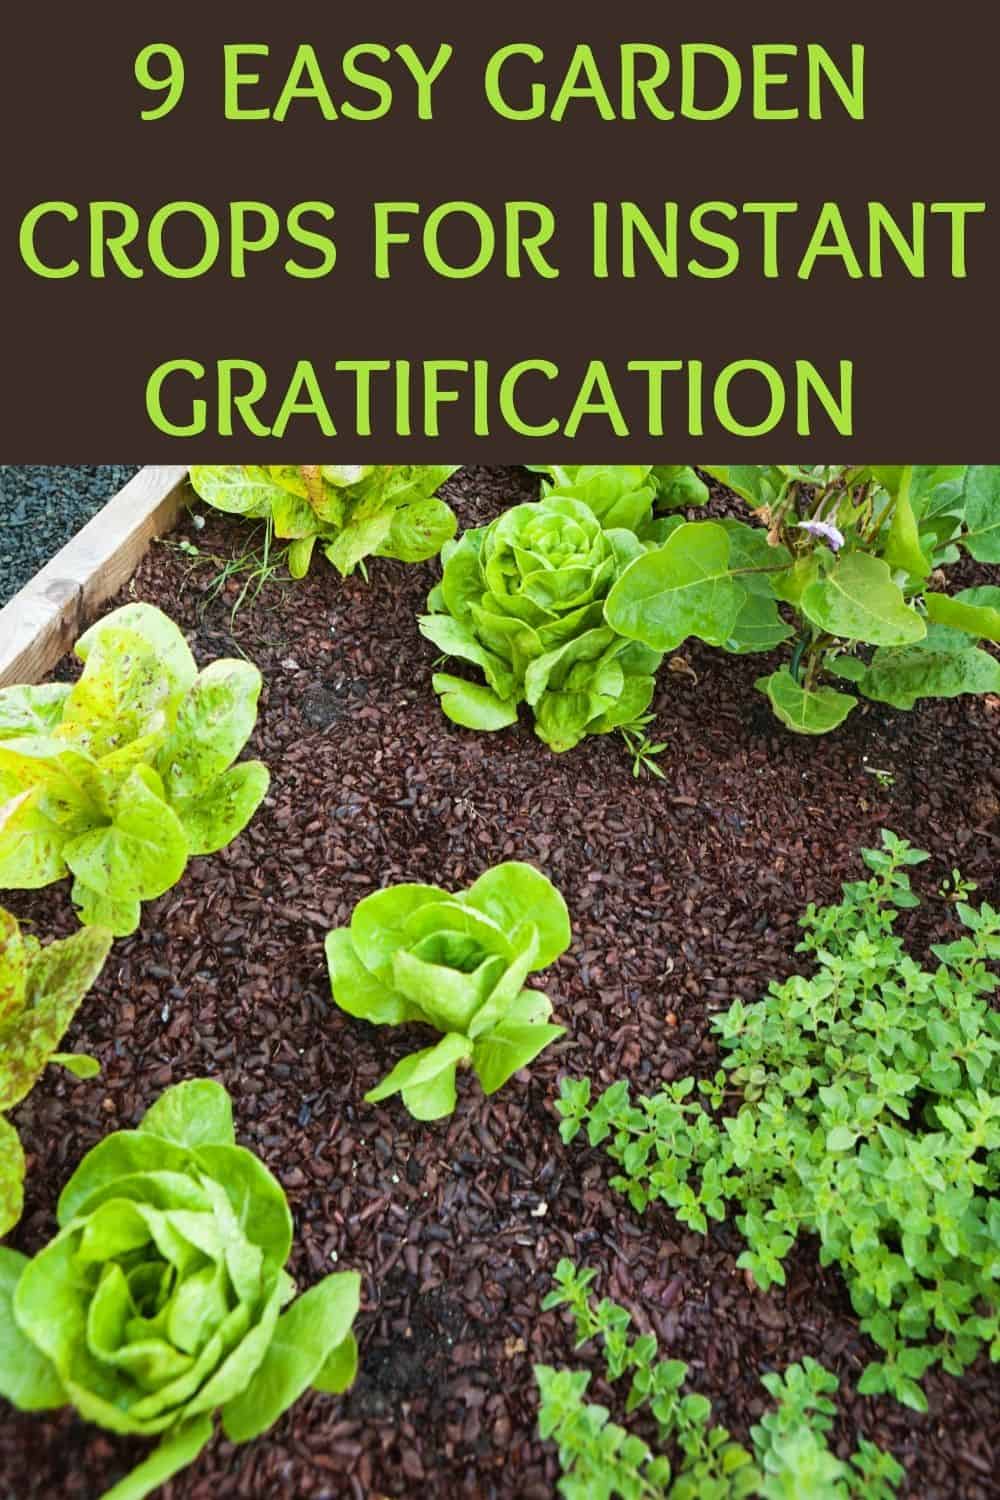 9 easy garden crops for instant gratification